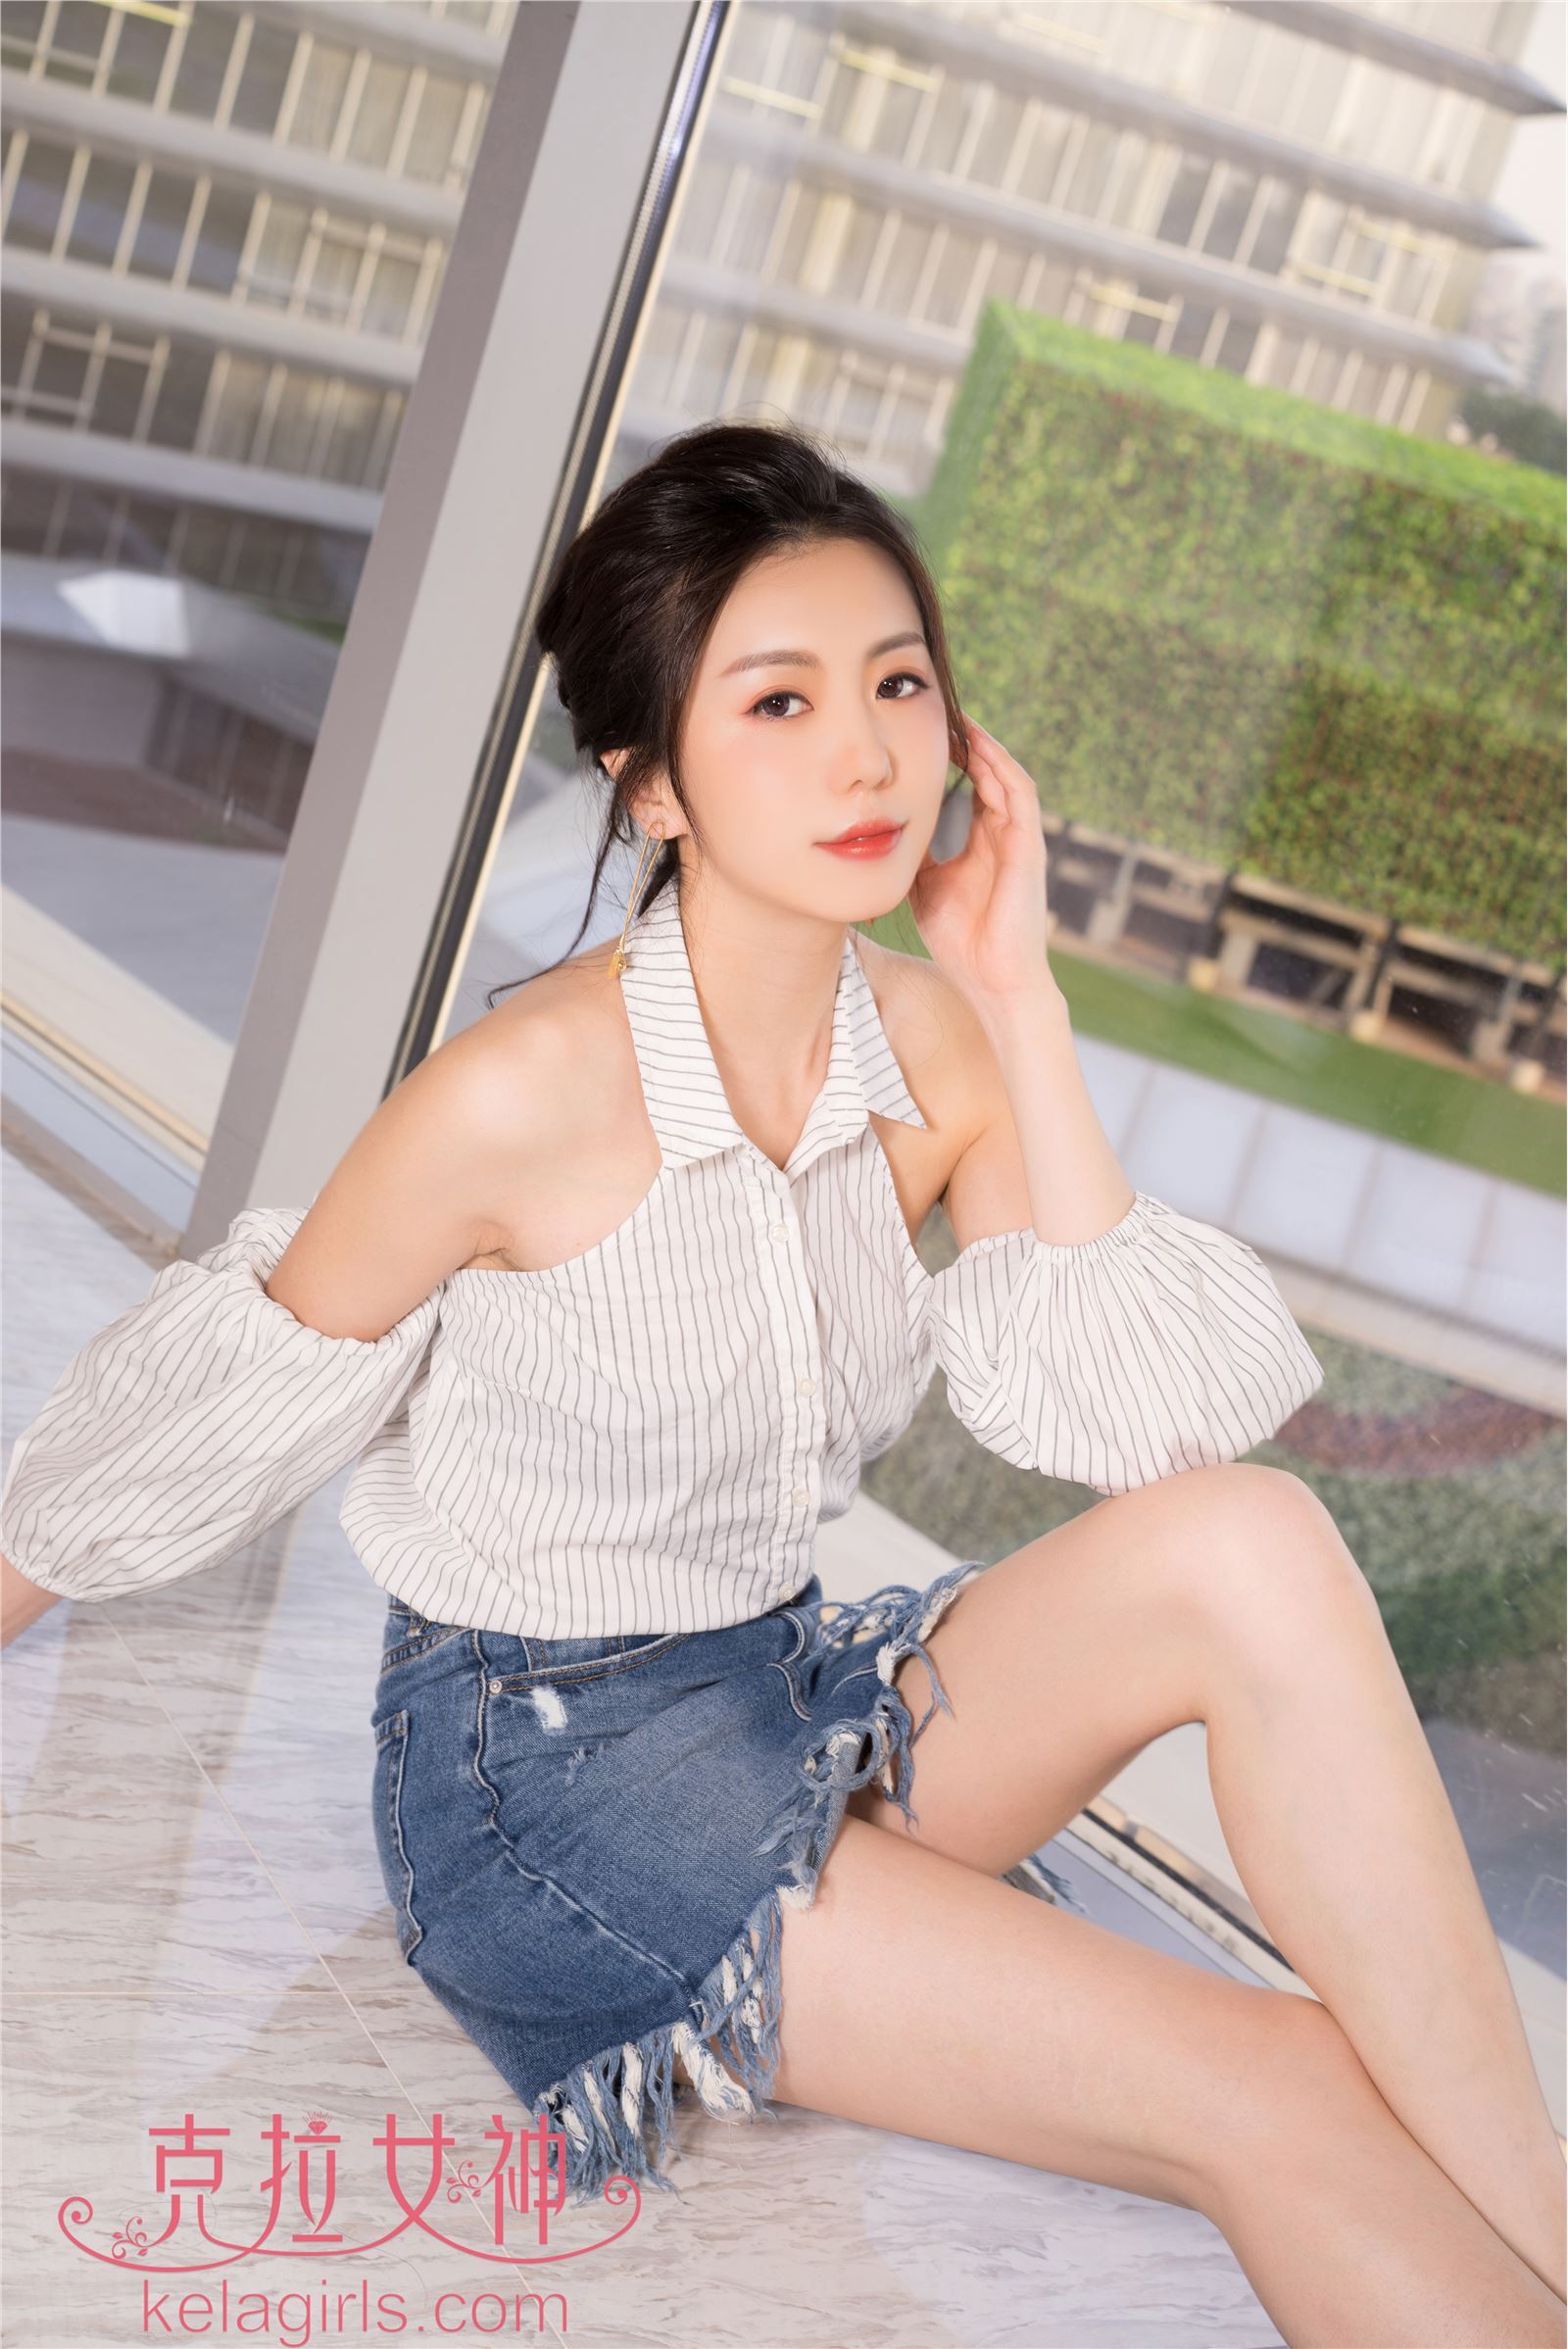 [Kela girls] Yunfei, May 28, 2018